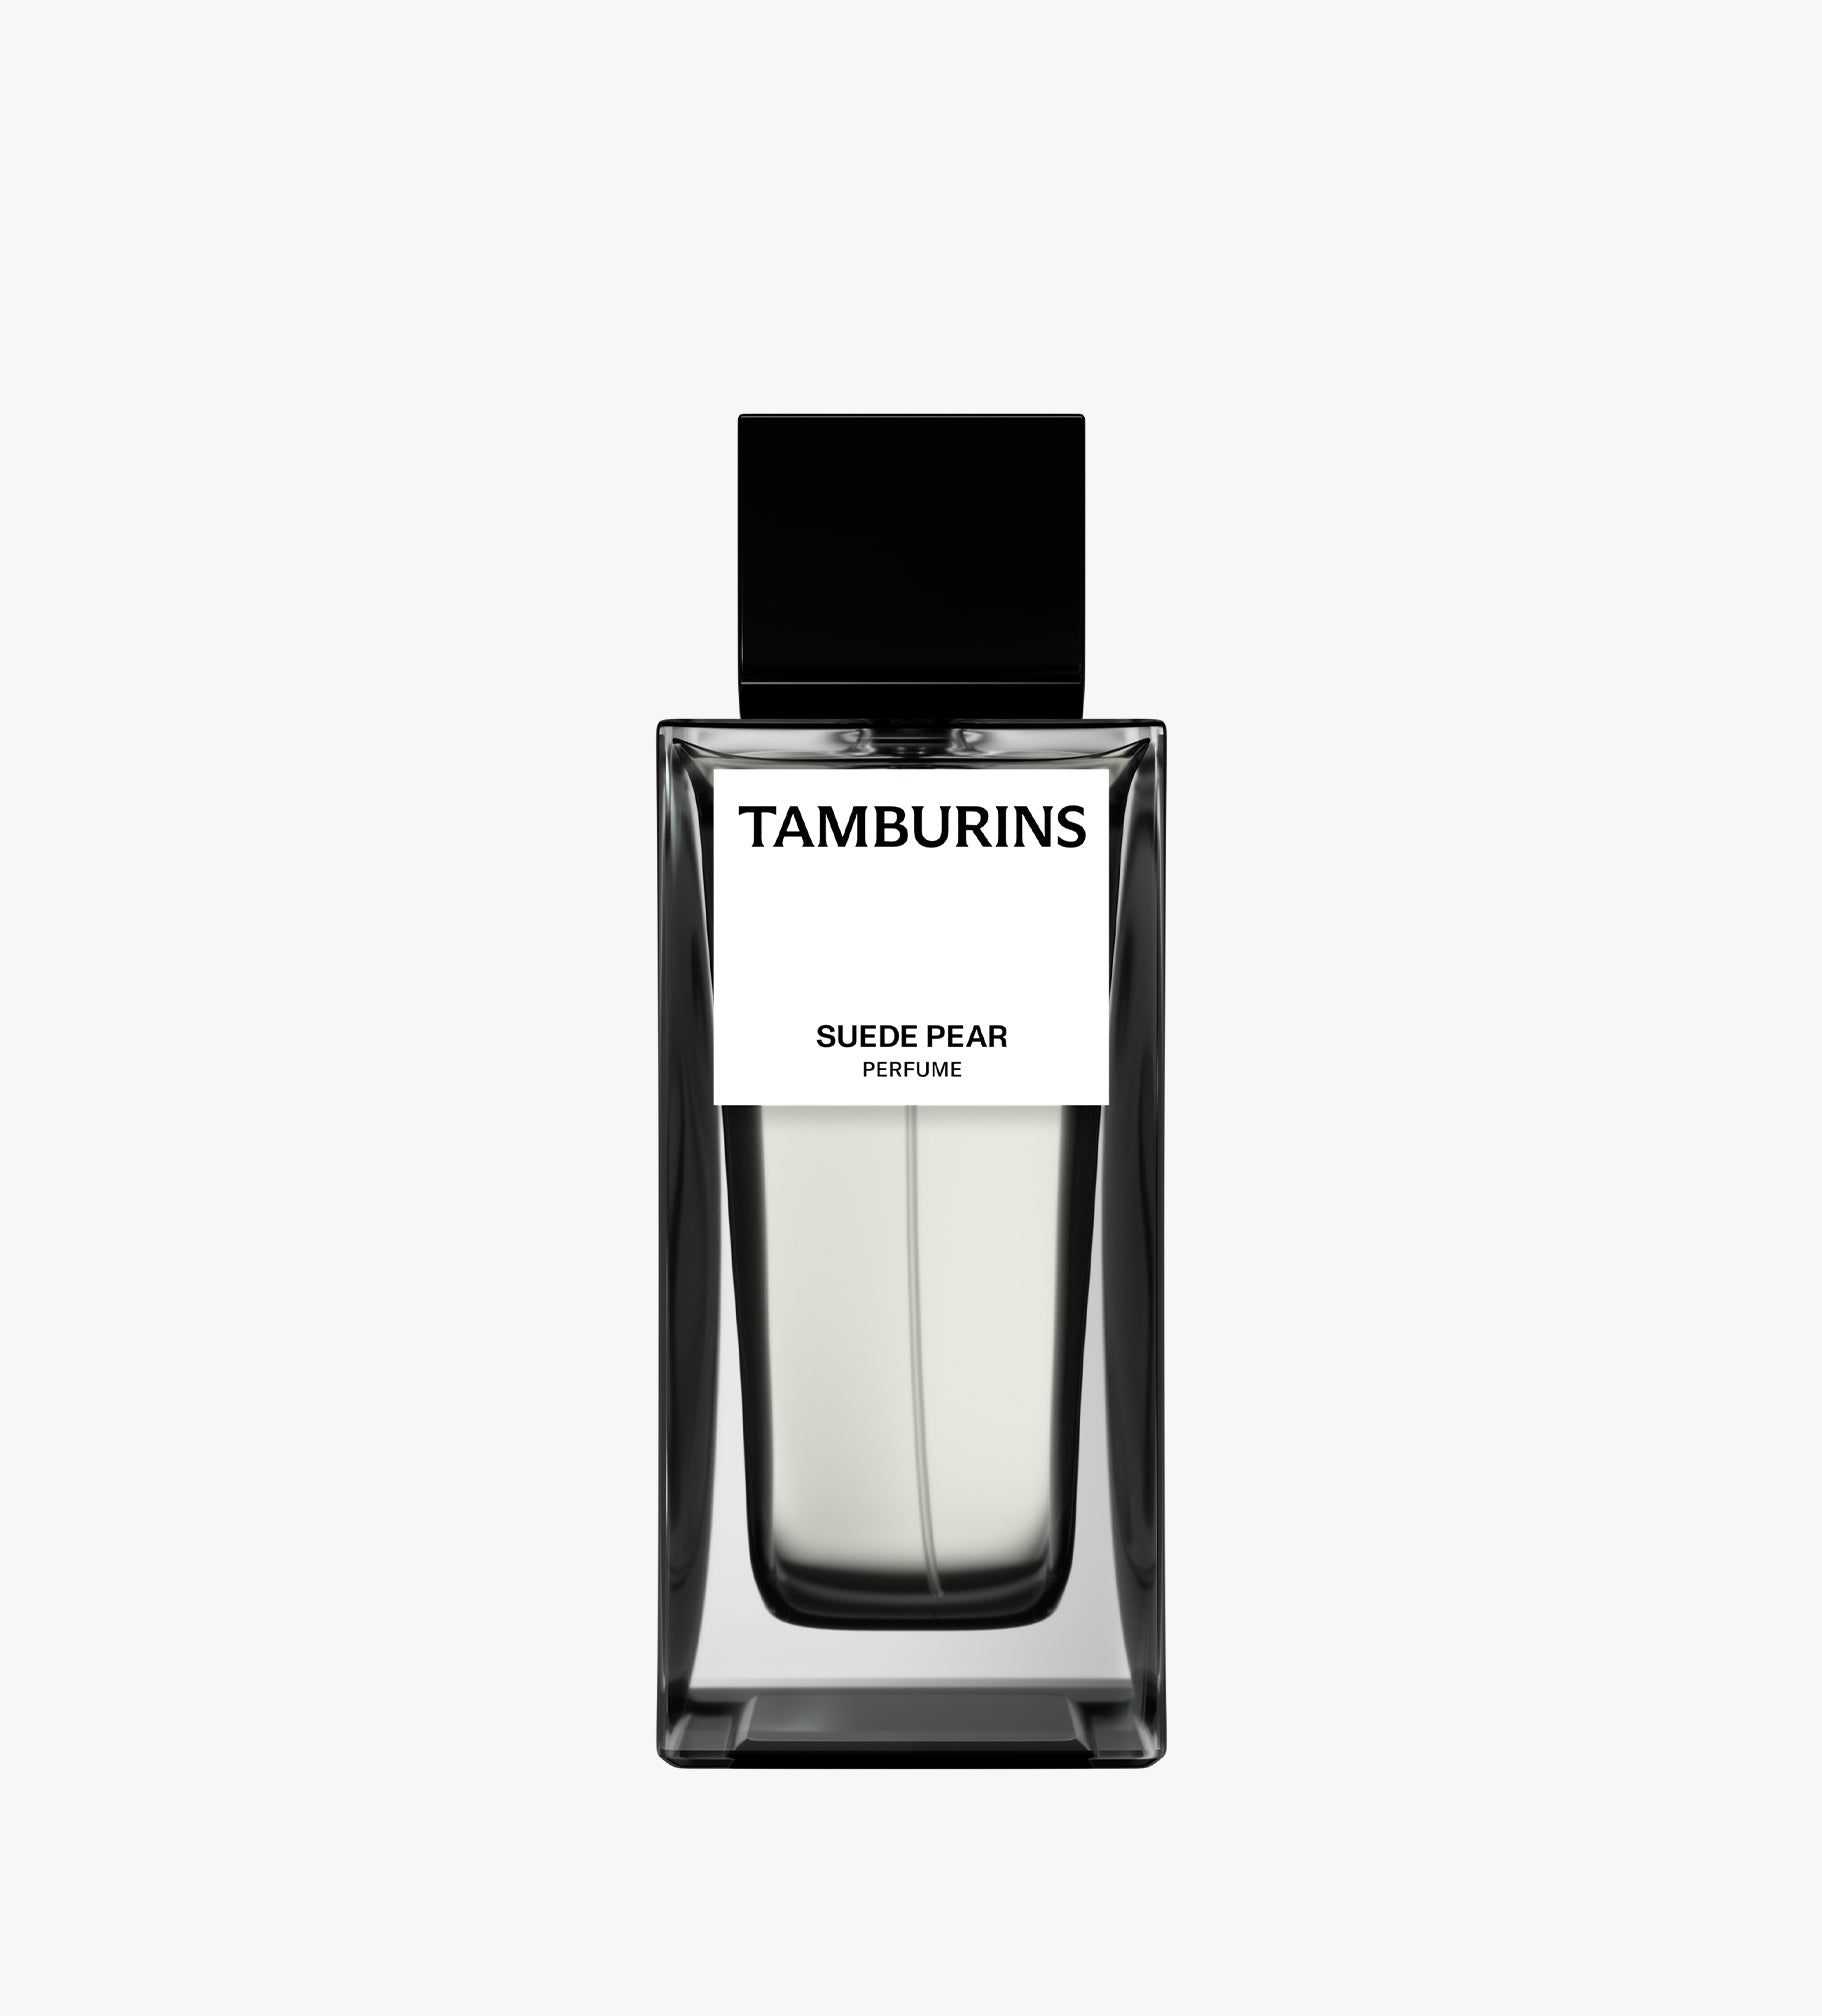 Tamburins Perfume - Suede Pear